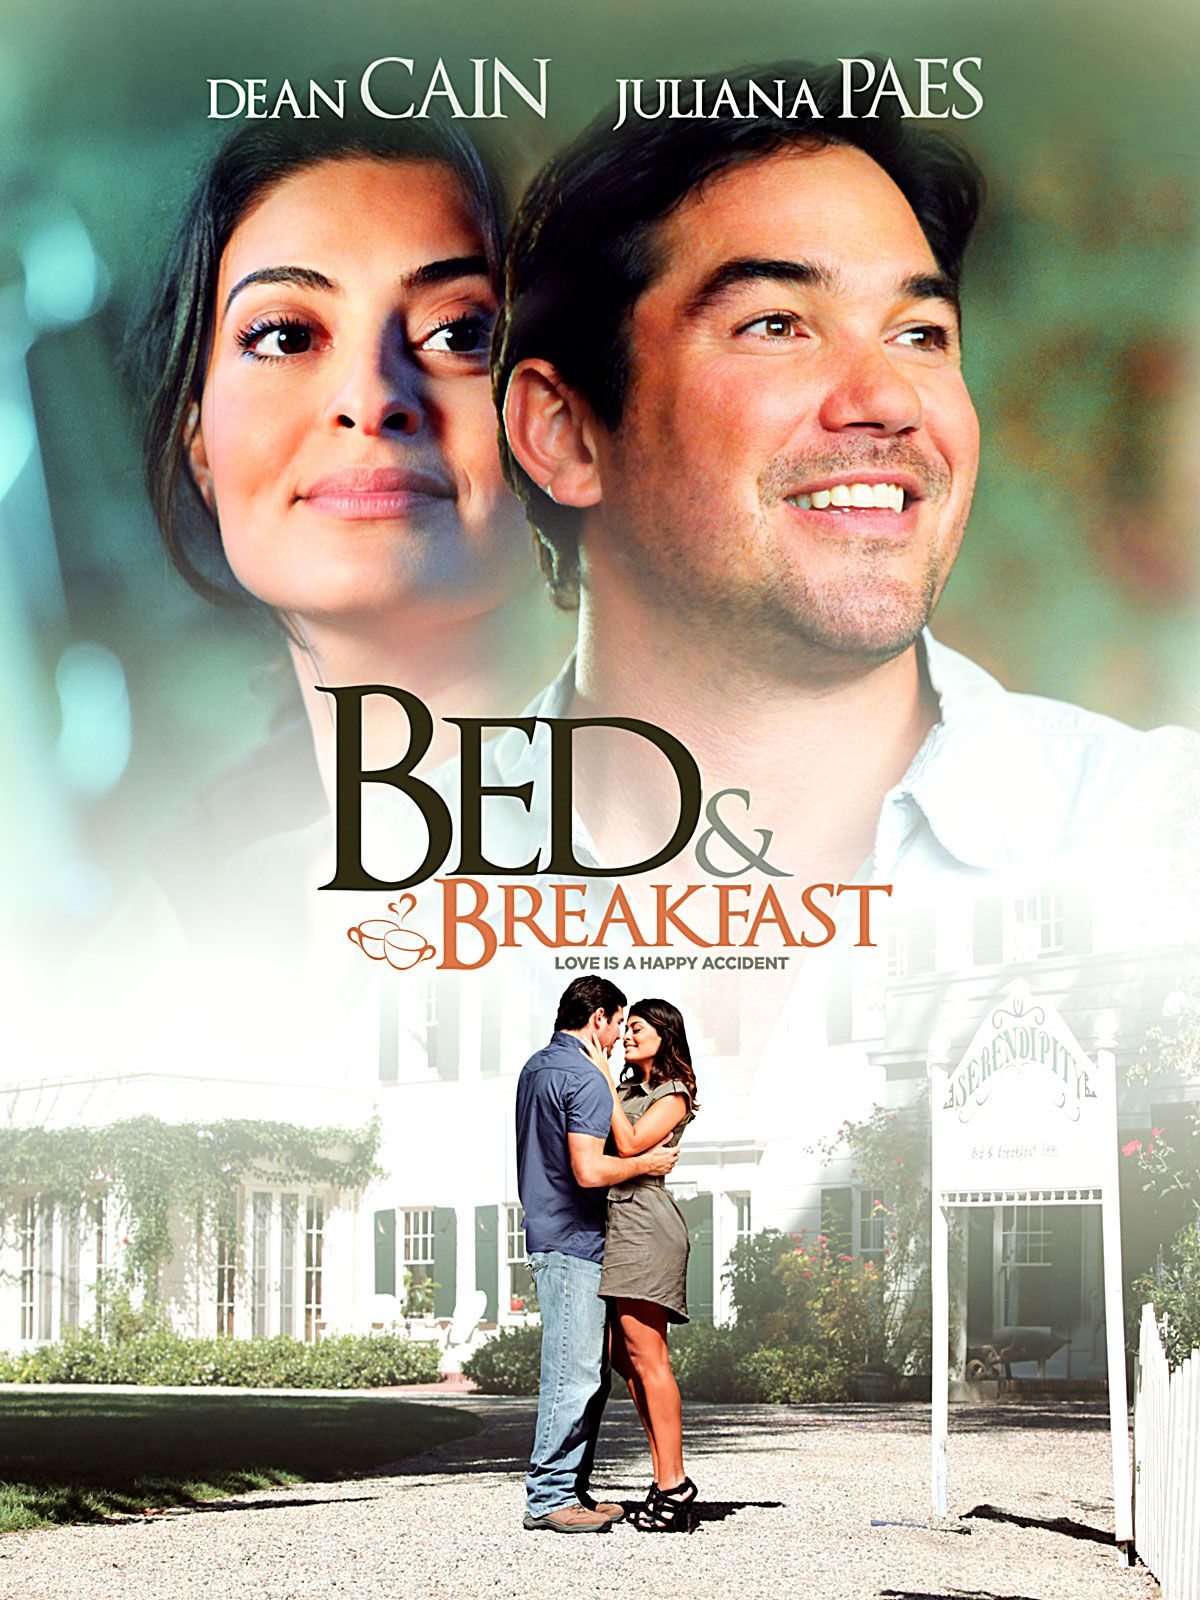 Keyart for the movie Bed & Breakfast